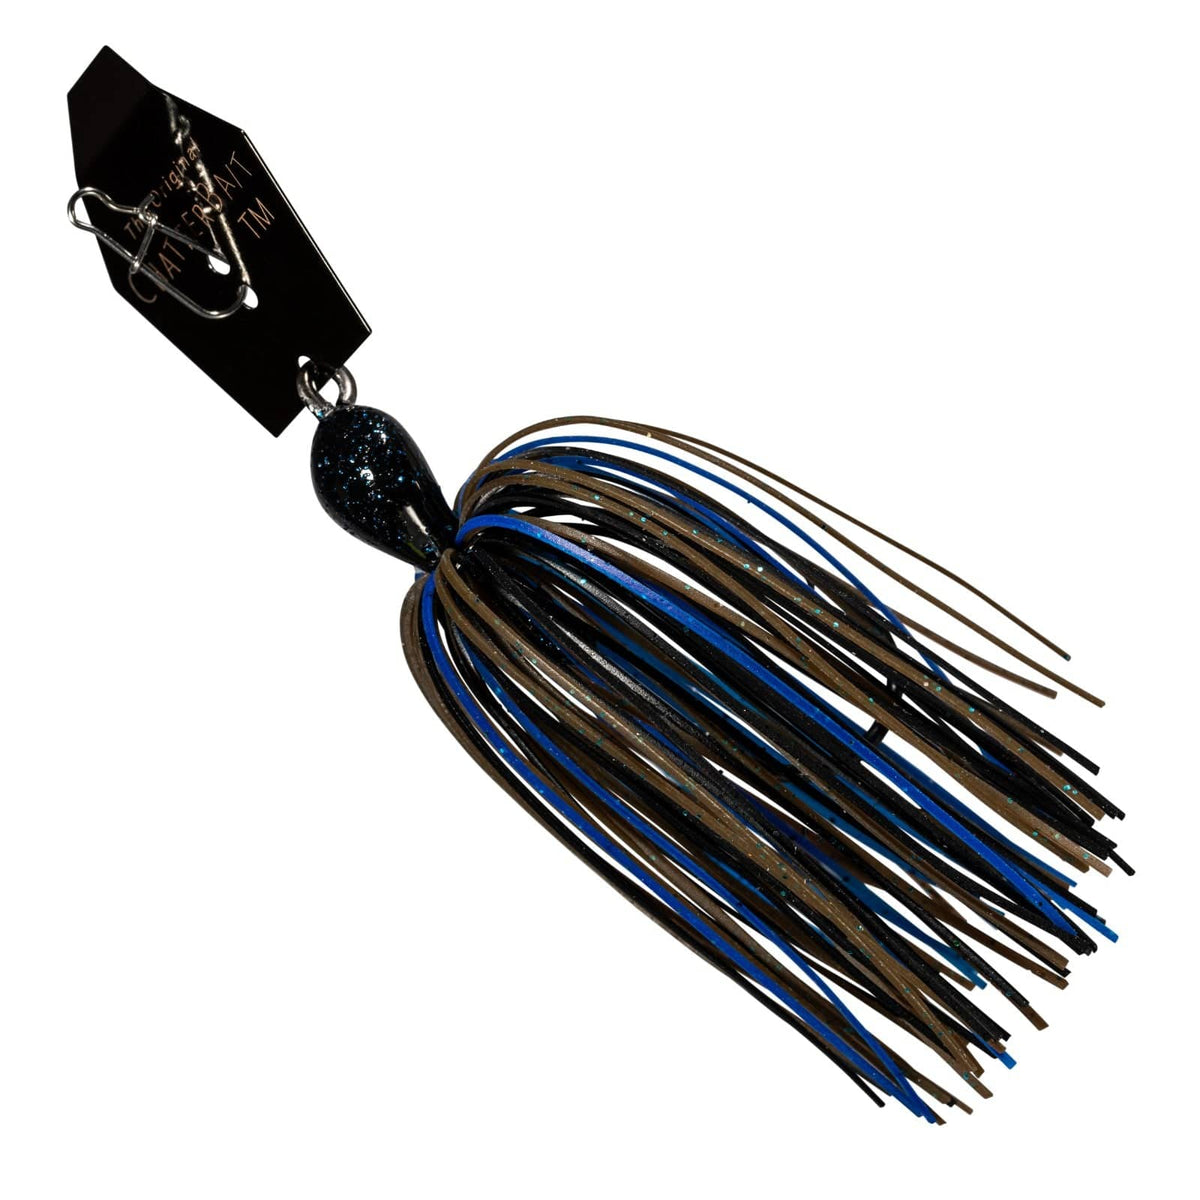 Tackle &amp; Line Z-Man Big Blade Chatterbait 1-2 oz. Black Blue Candy Z-Man Big Blade Chatterbait | Pescador Fishing Supply